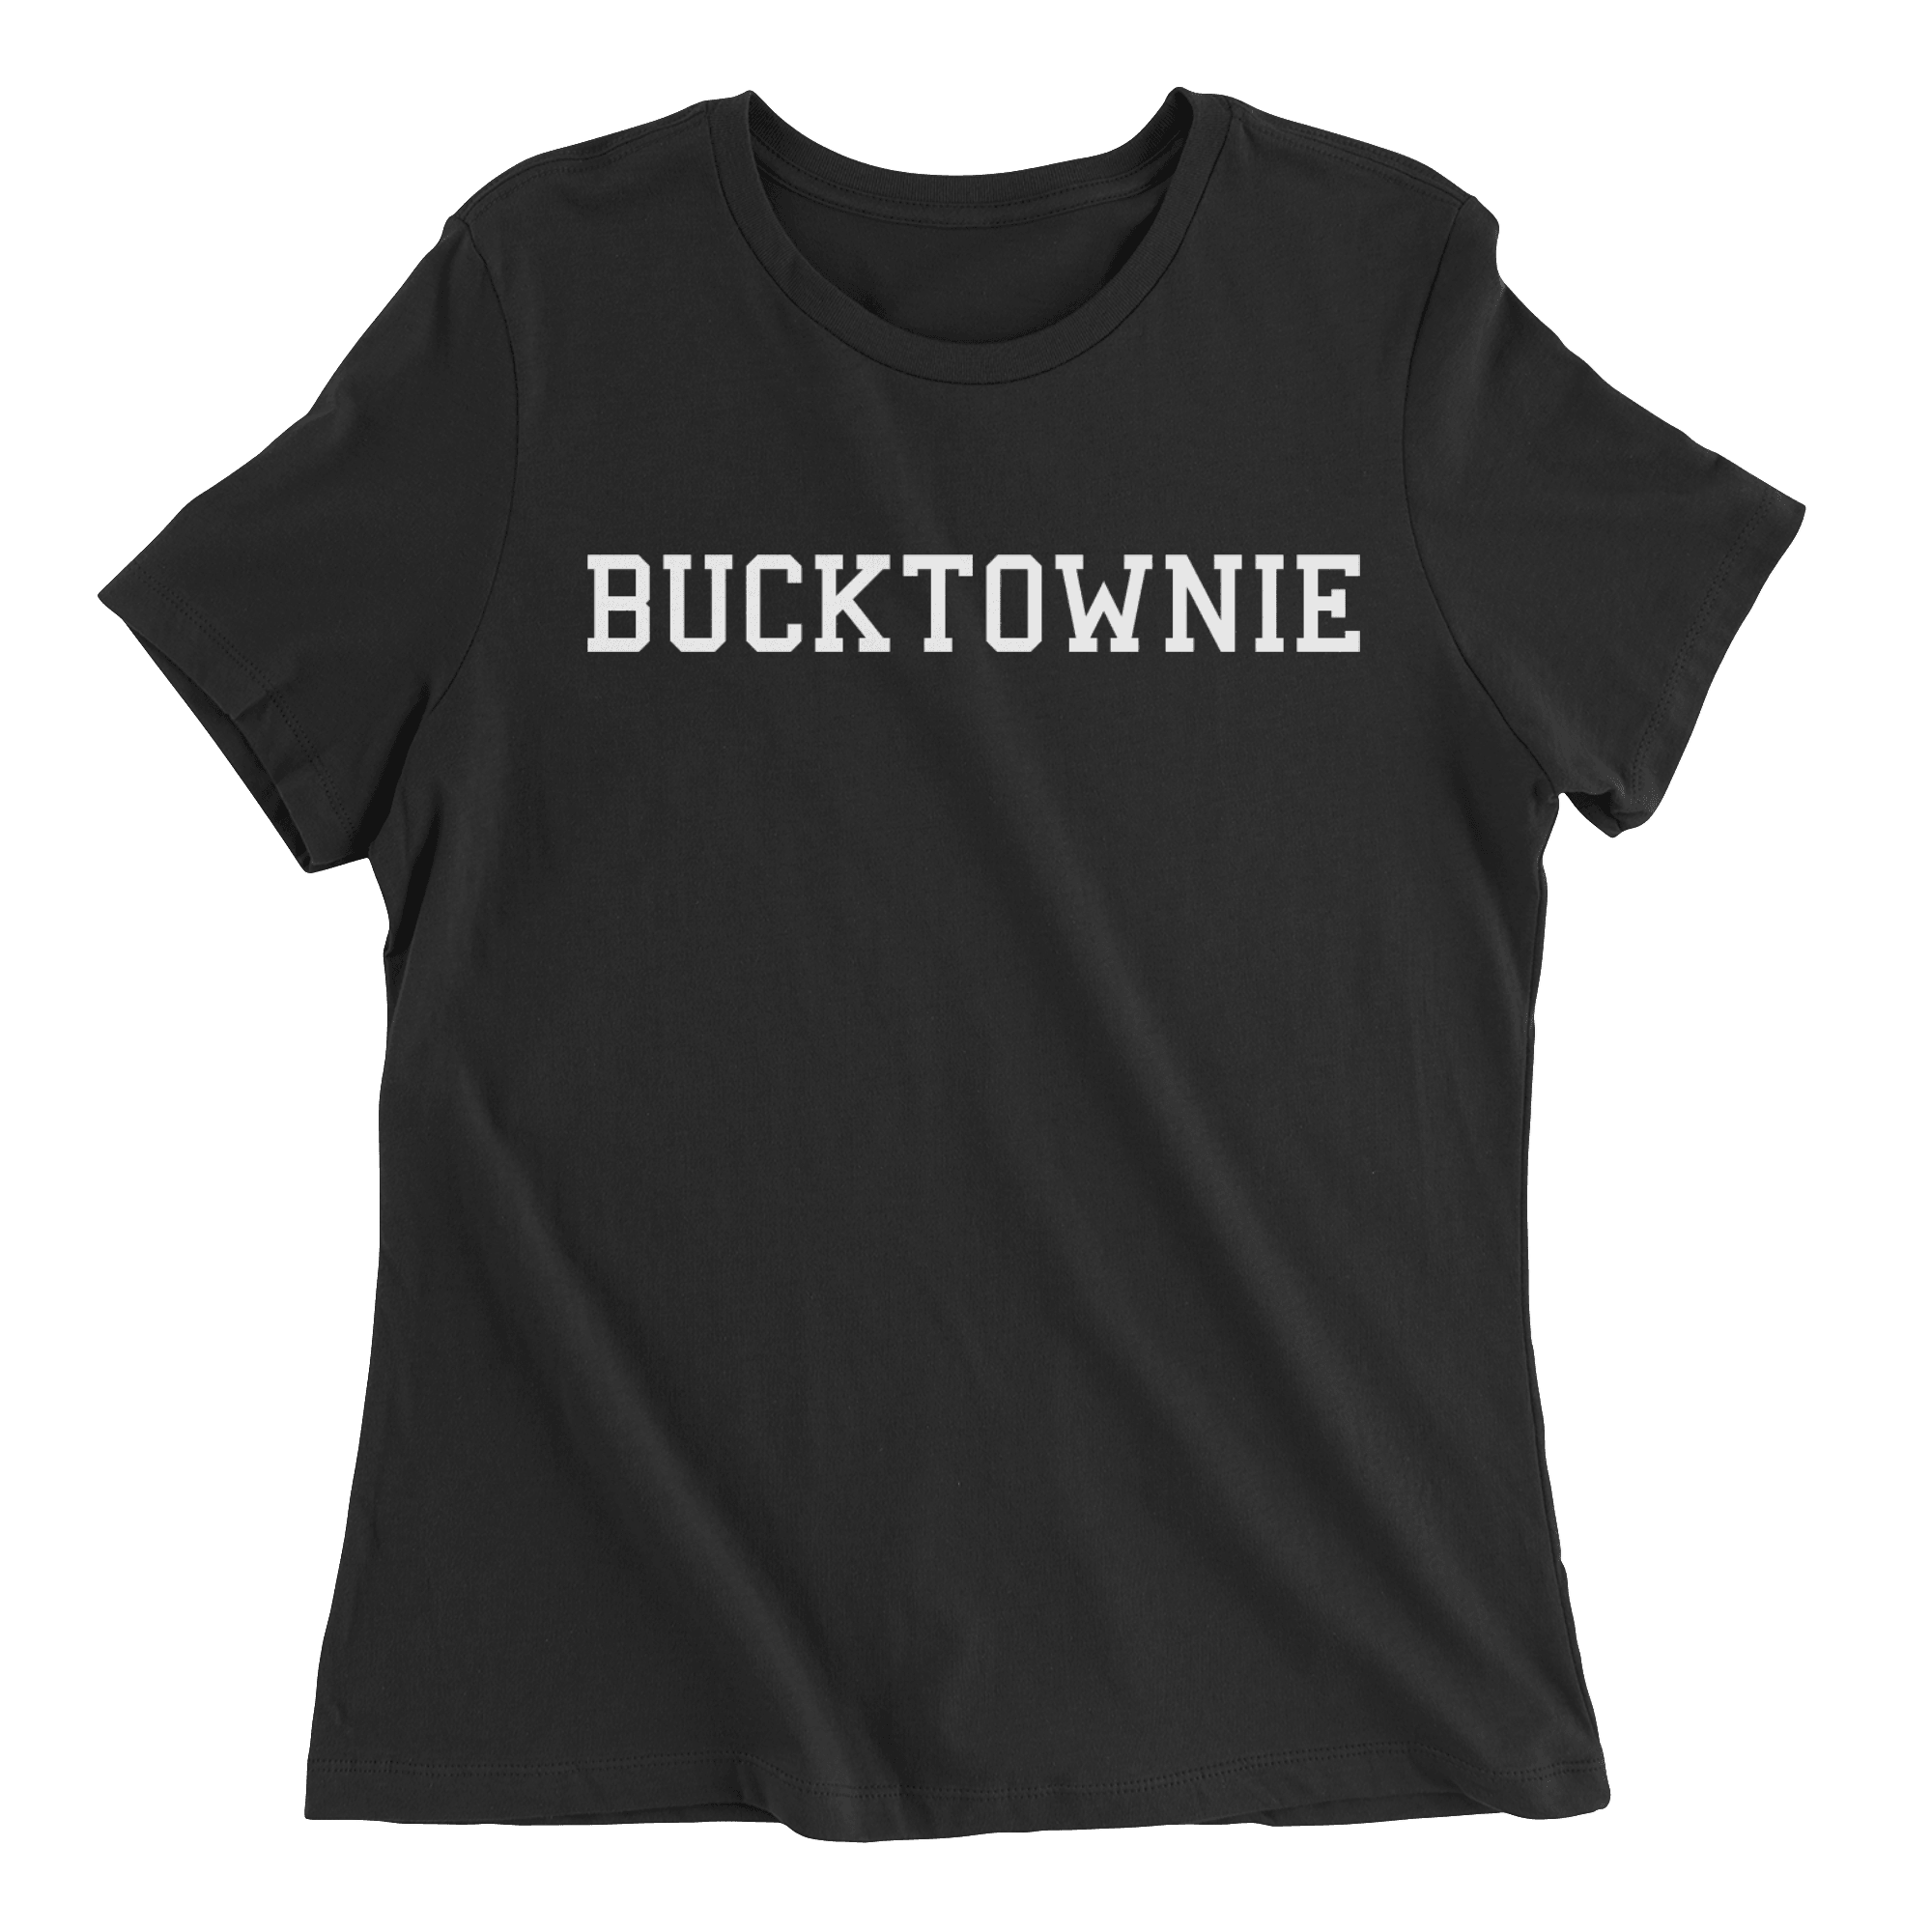 Bucktownie - The T-Shirt Deli, Co.